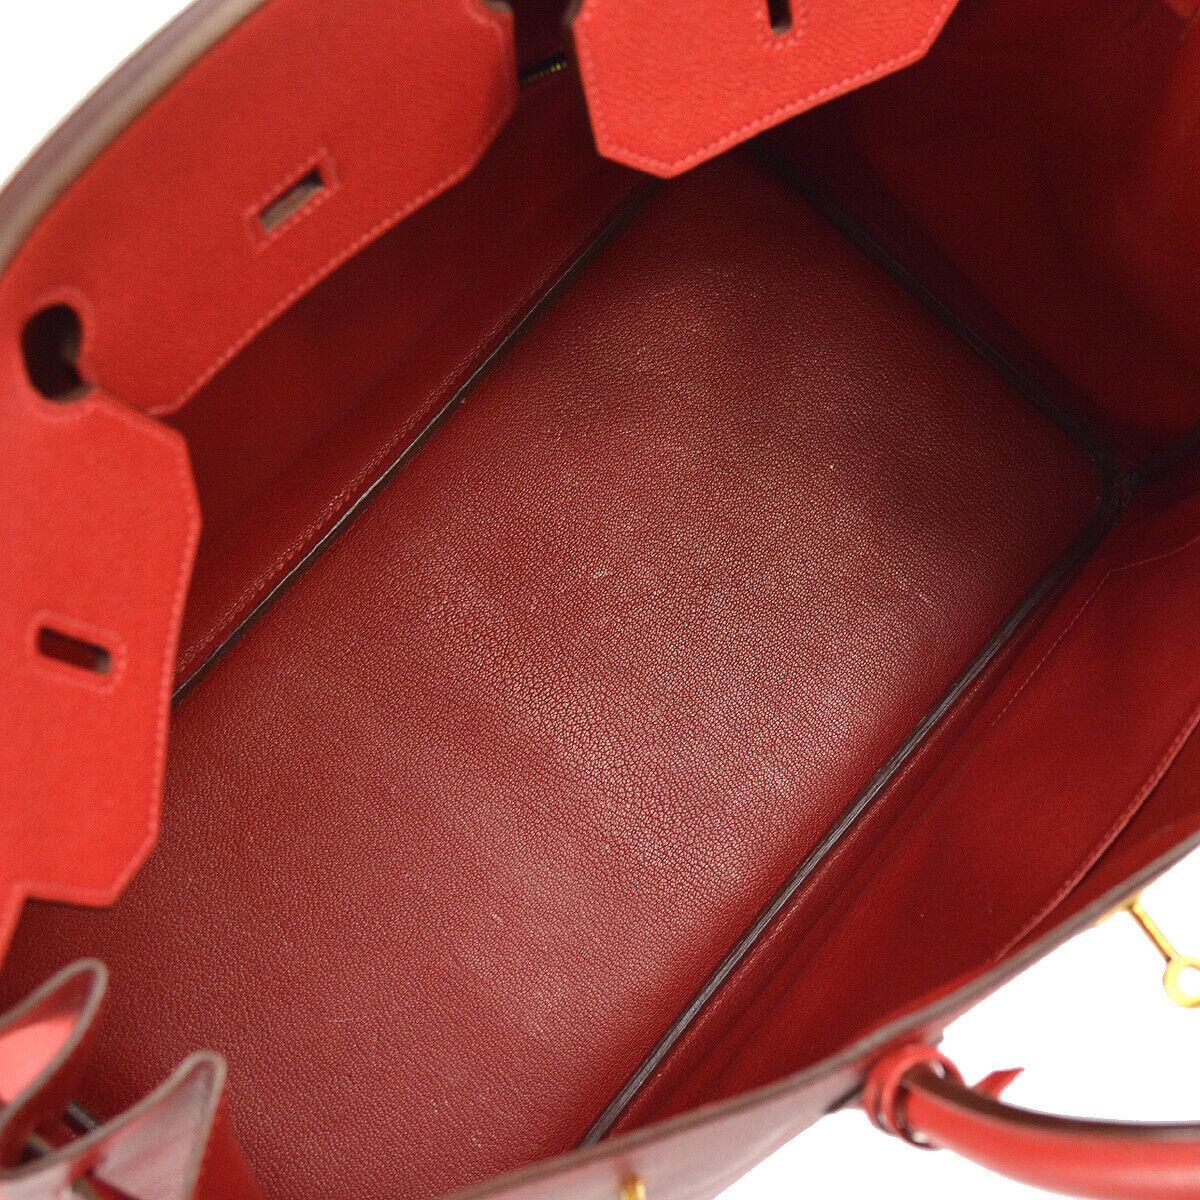 Hermes Birkin 40 Red Leather Gold Top Handle Satchel Carryall Tote Bag 2